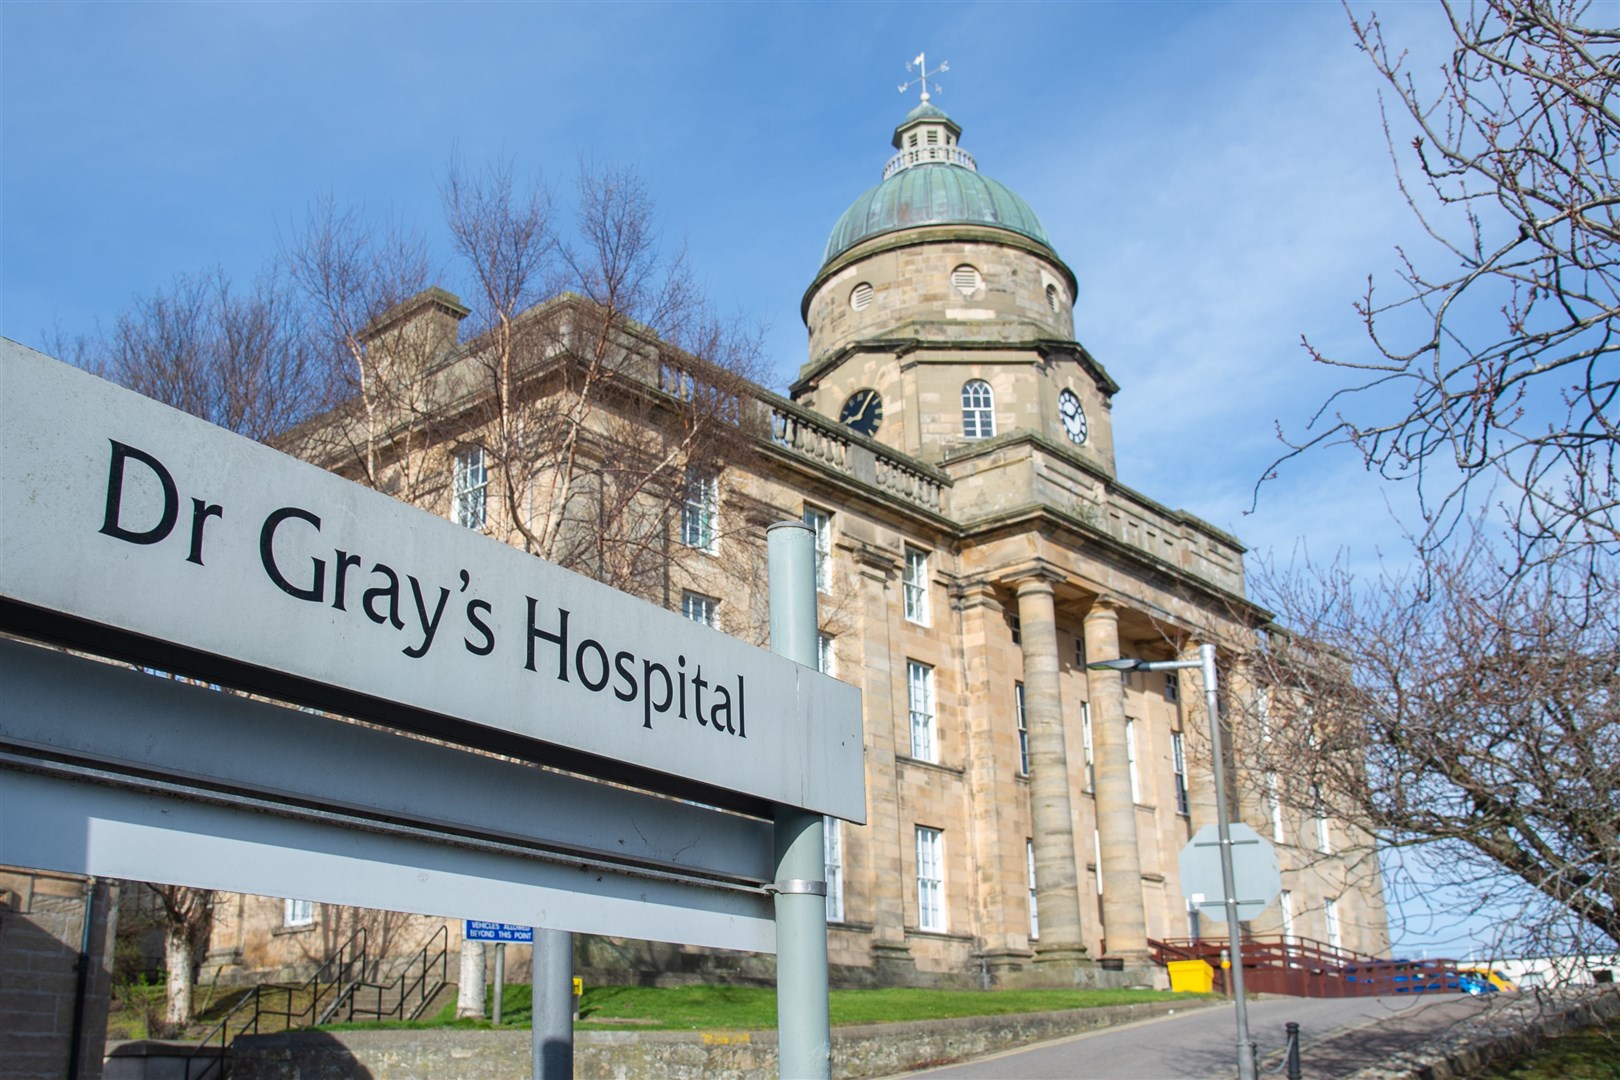 Dr Gray's Hospital. Picture: Daniel Forsyth